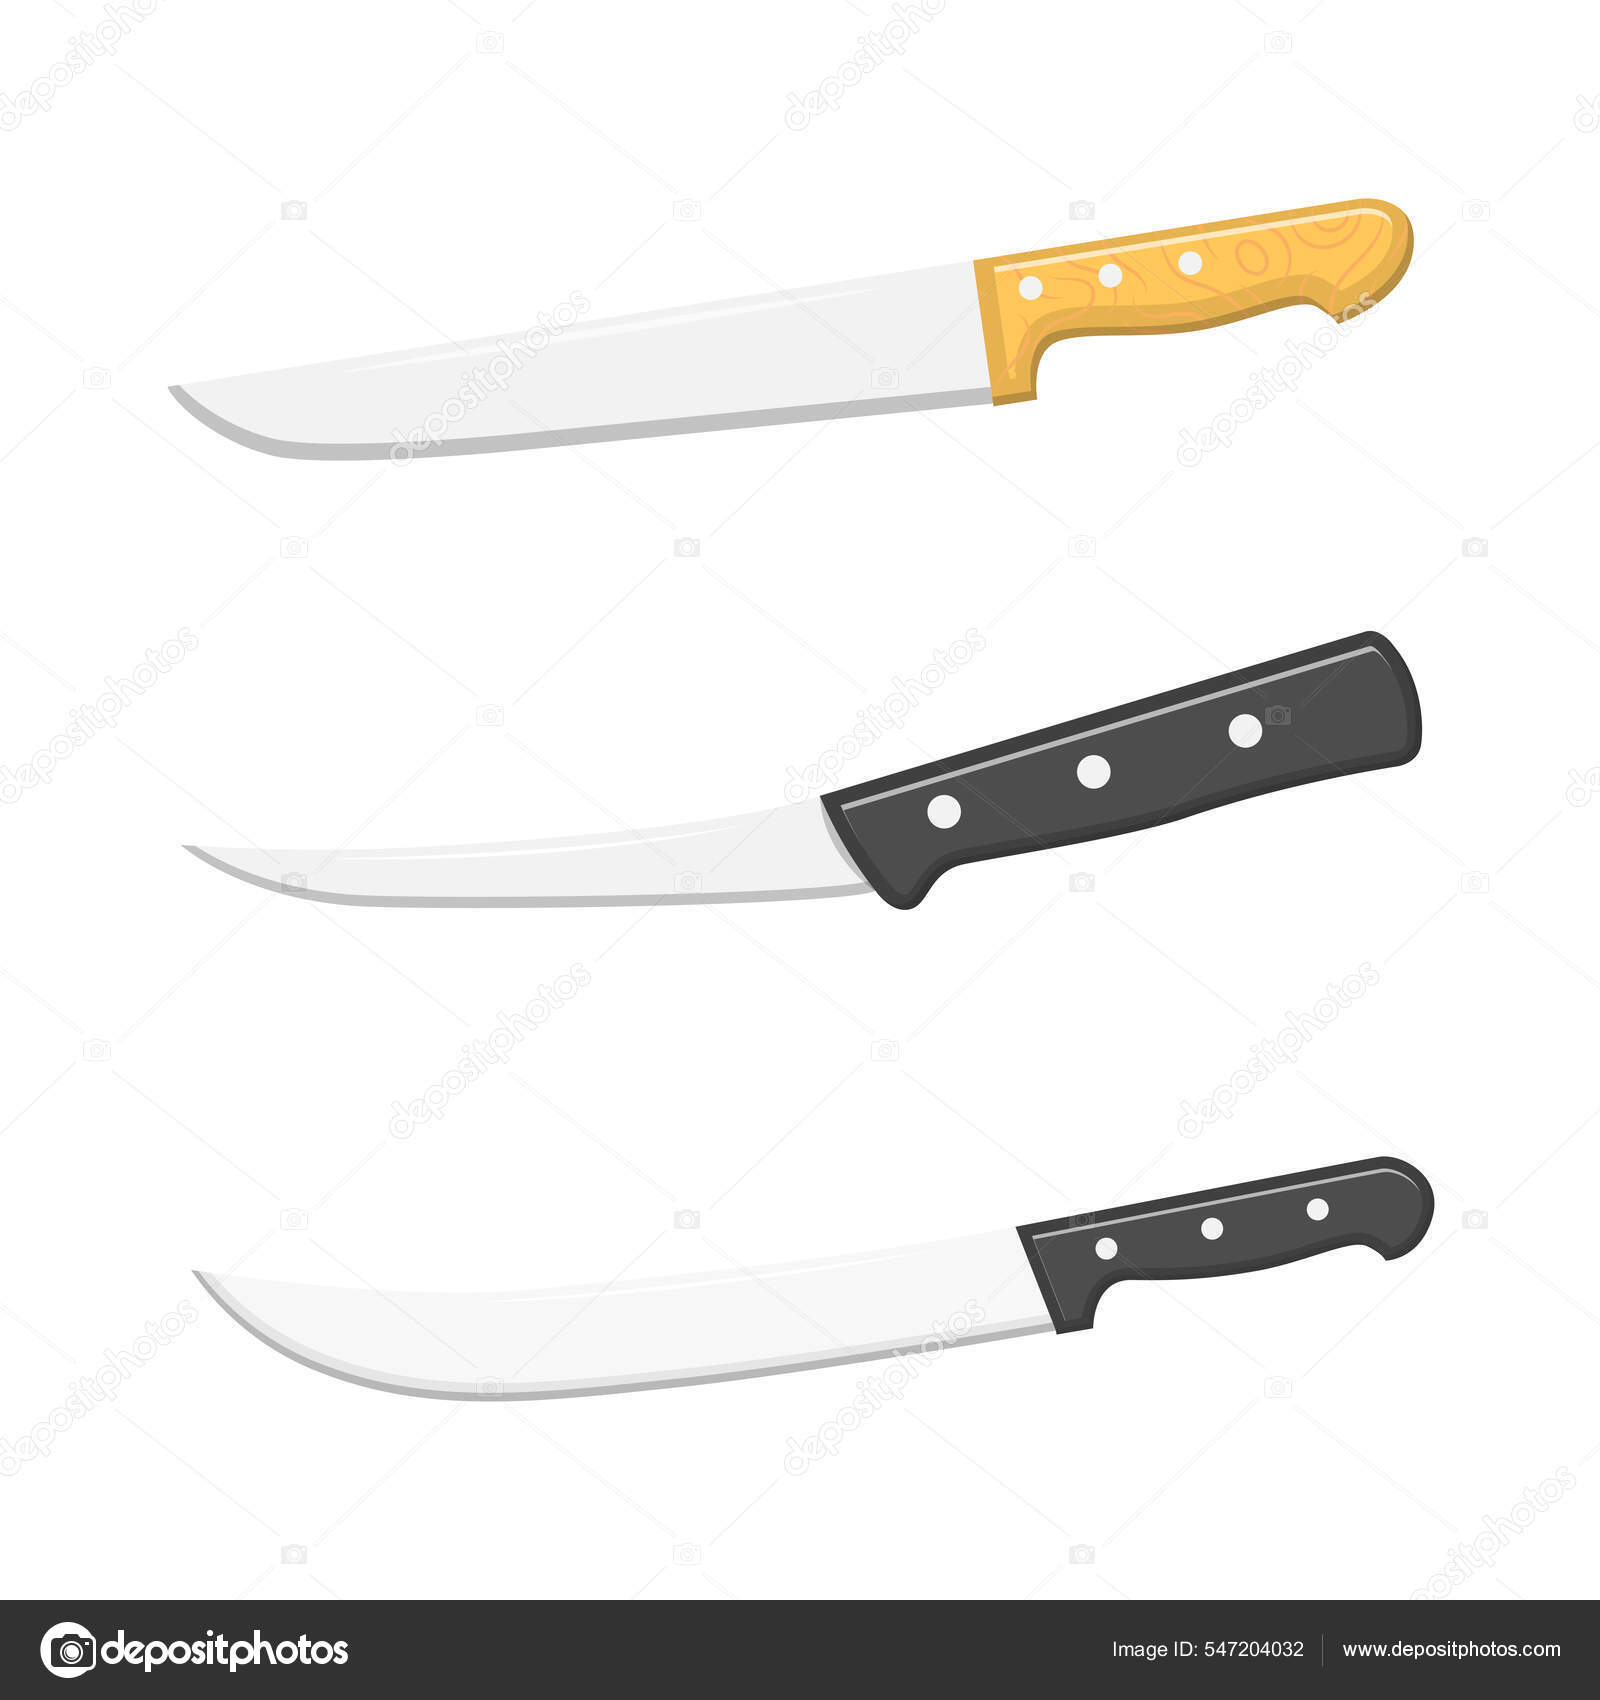 https://st.depositphotos.com/63263940/54720/v/1600/depositphotos_547204032-stock-illustration-knife-set-flat-illustration-clean.jpg